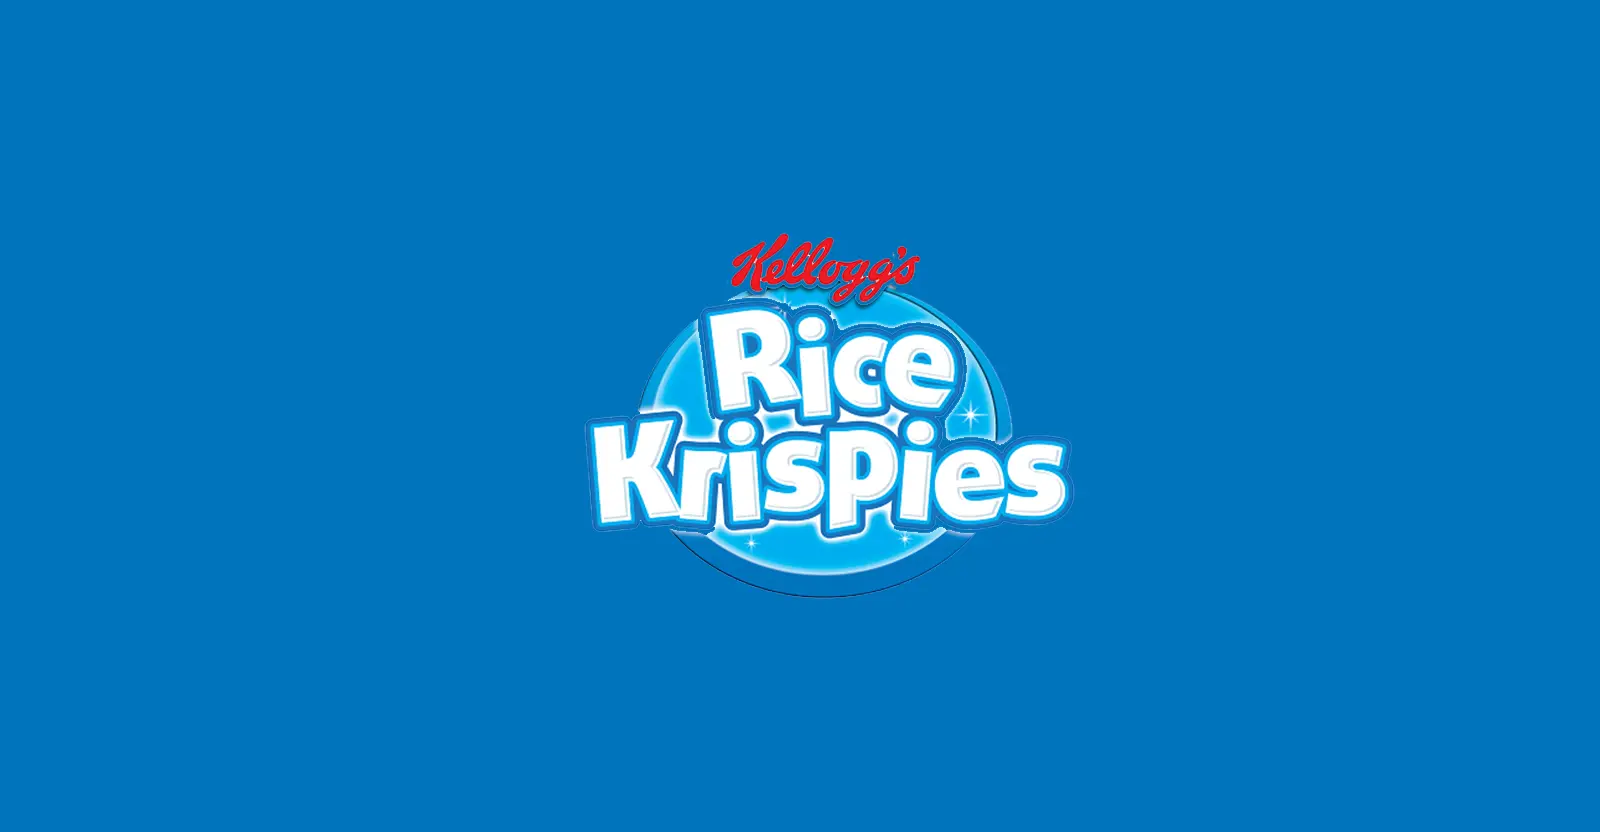 are rice krispies gluten-free